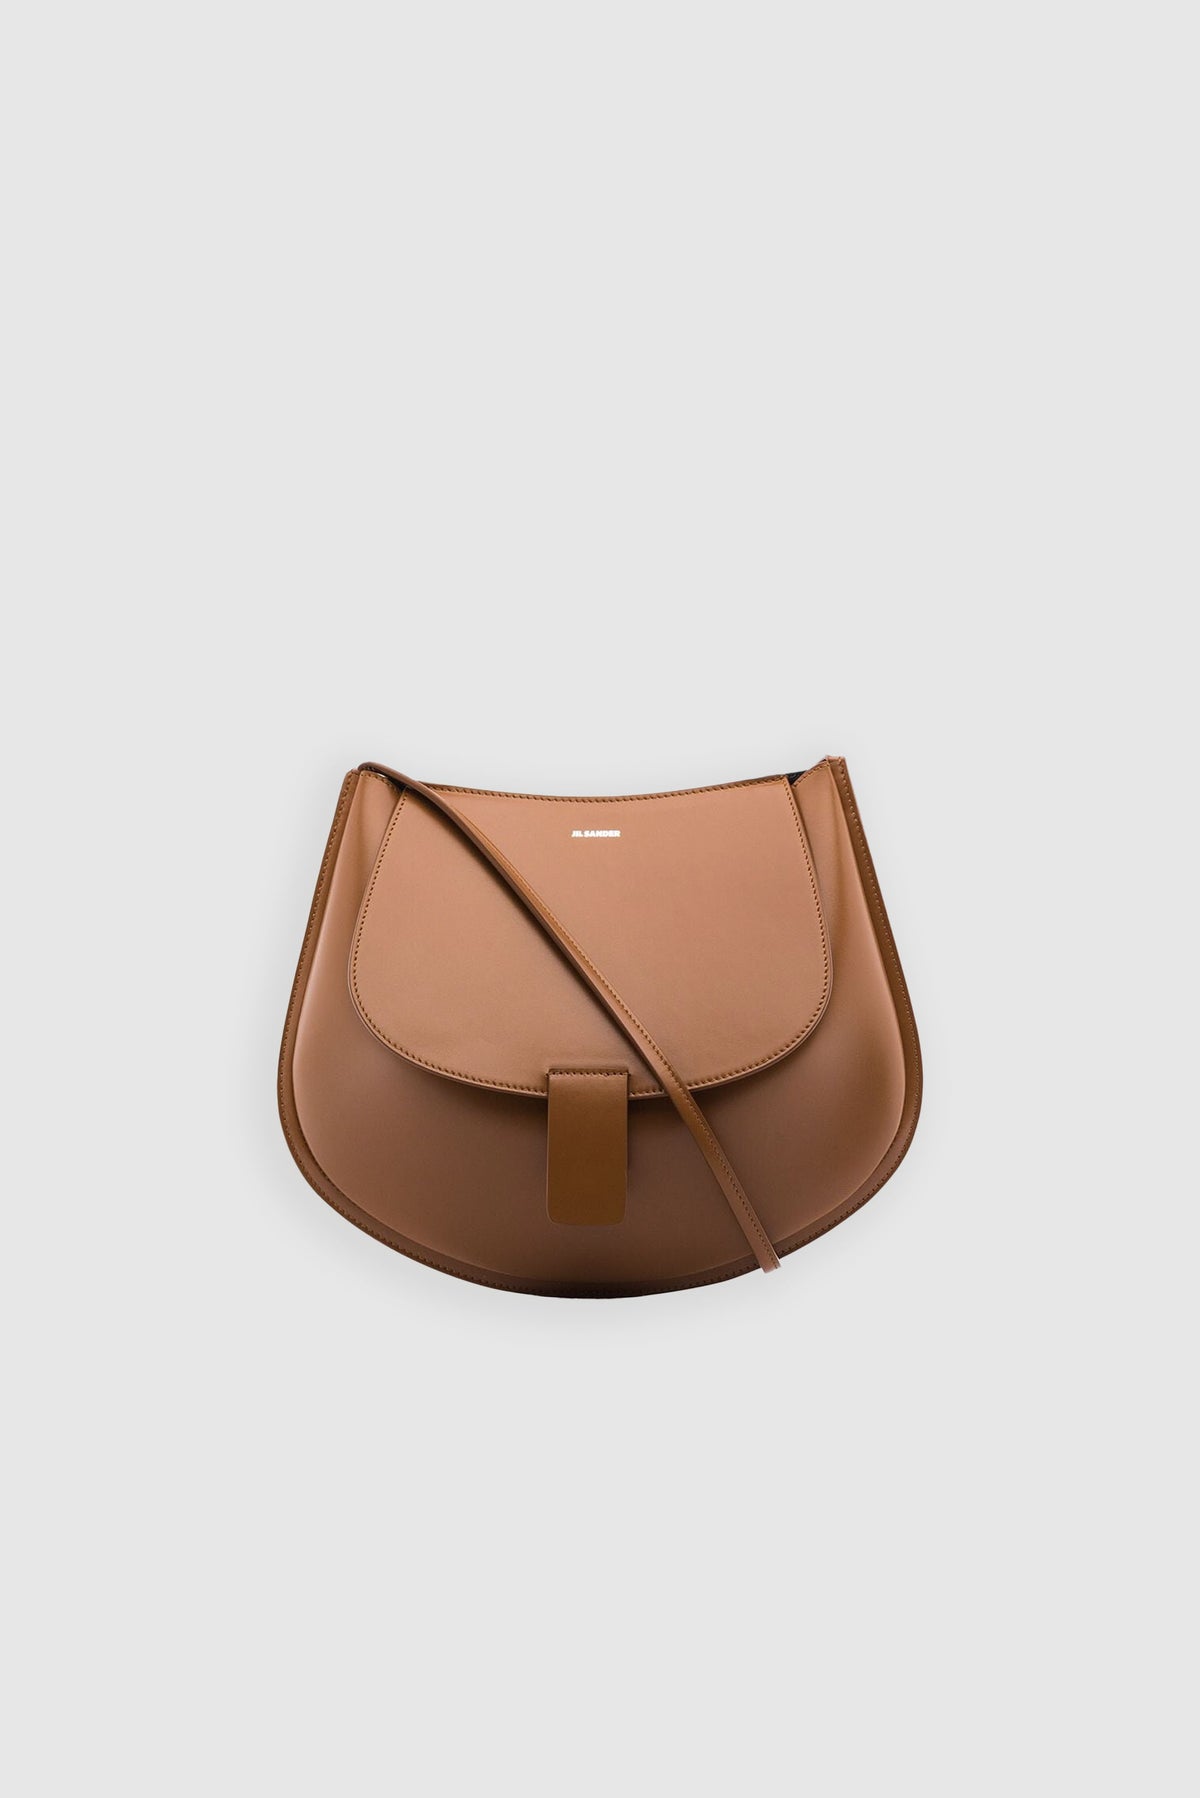 Jil Sander Soft Tan Crescent Mini Shoulder Bag